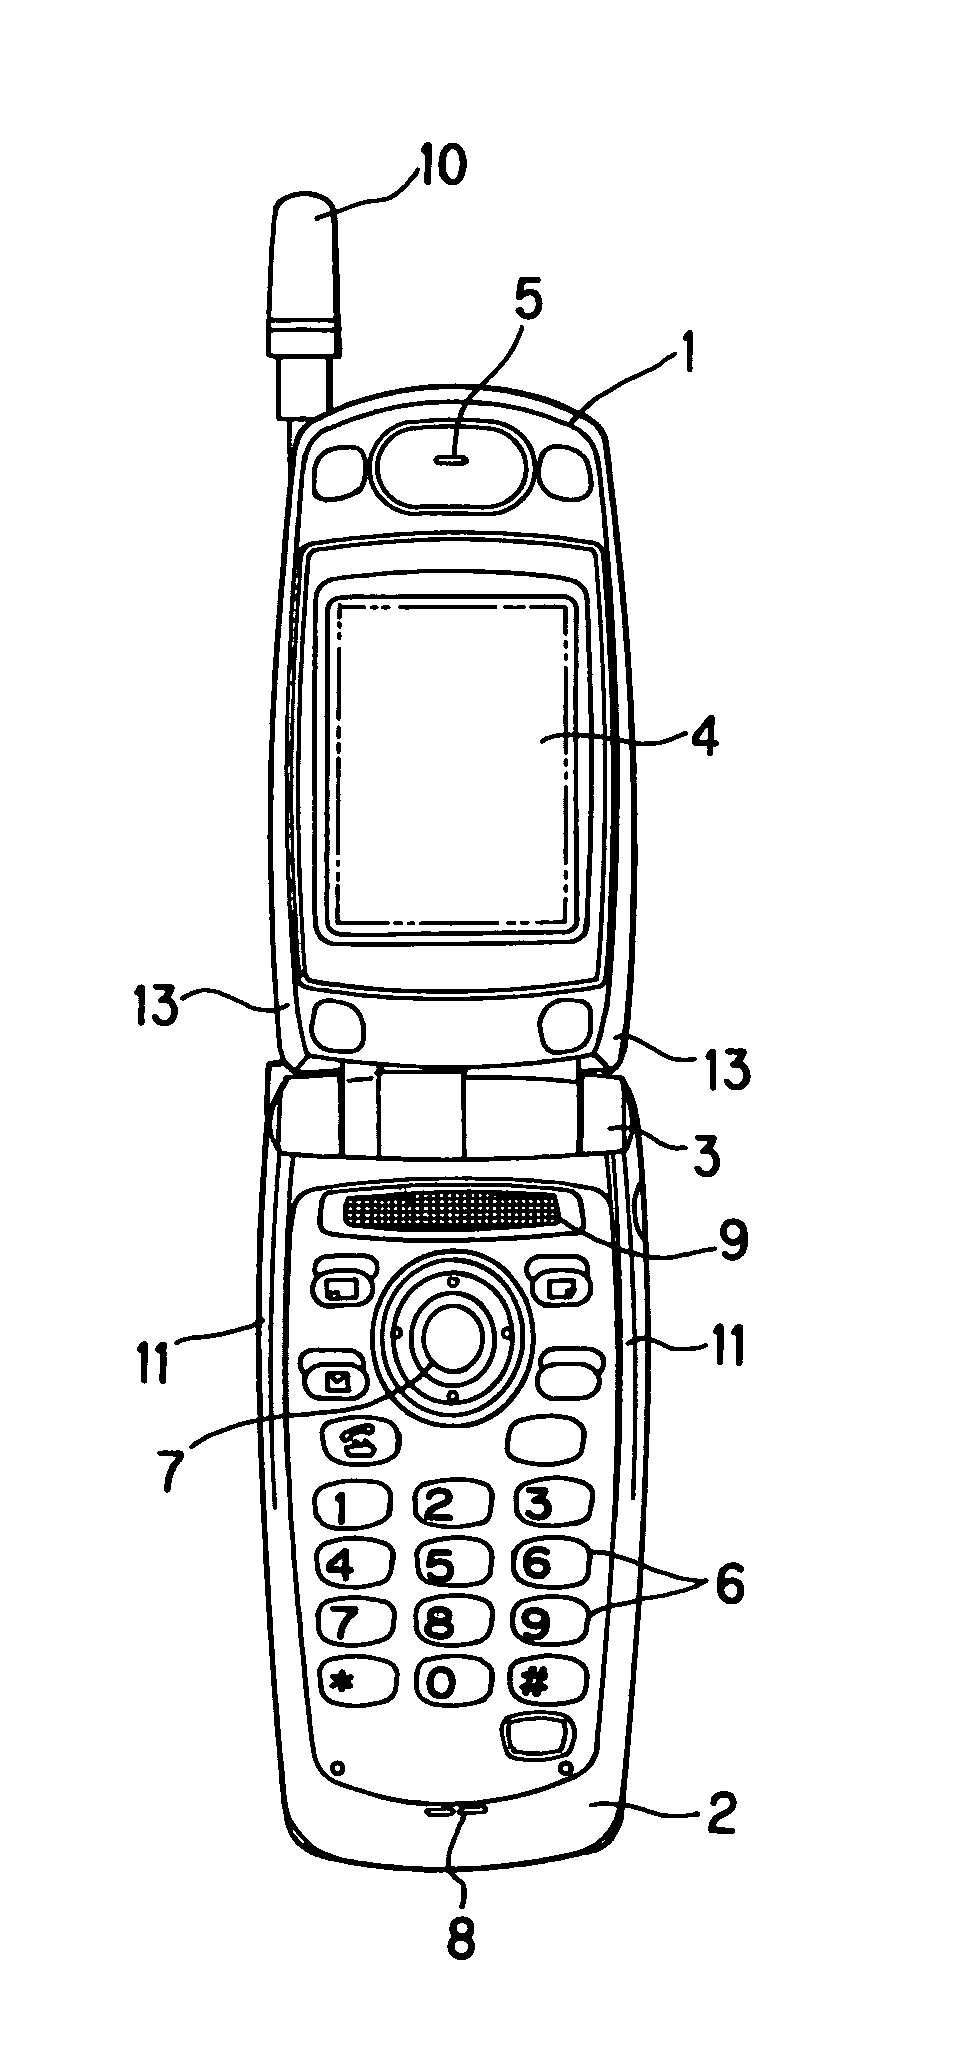 Mobile telephone